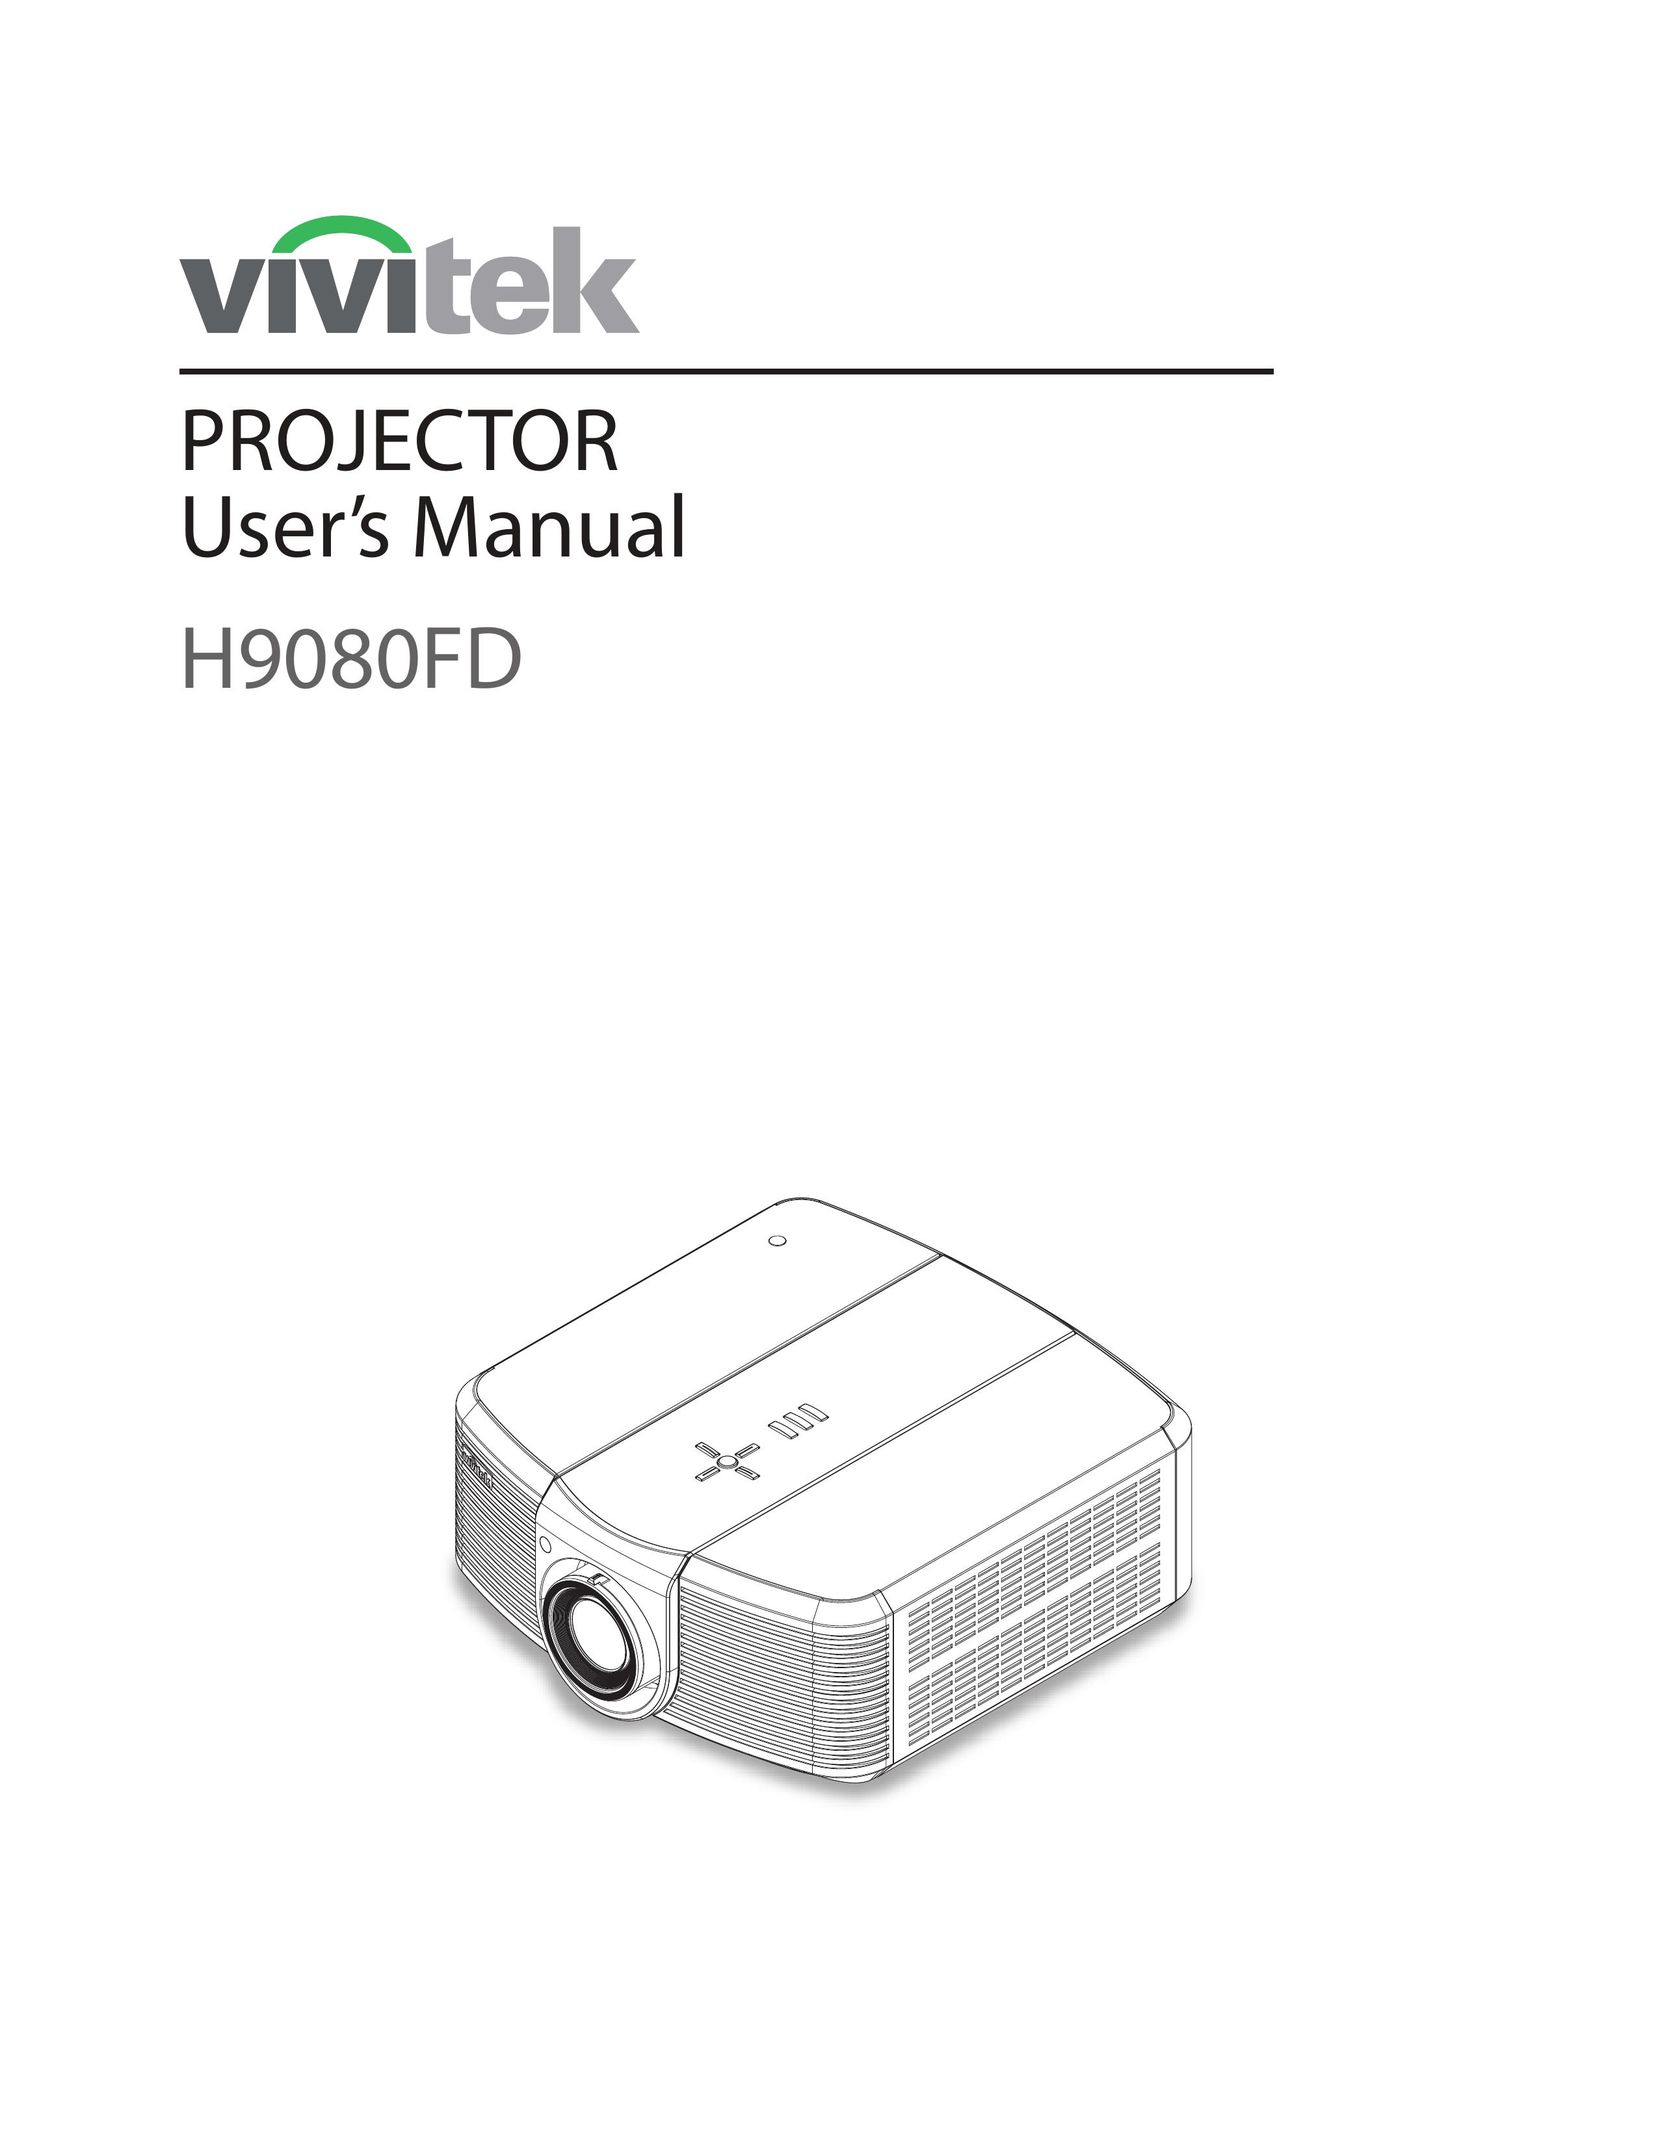 Vivitek H9080FD Projector User Manual